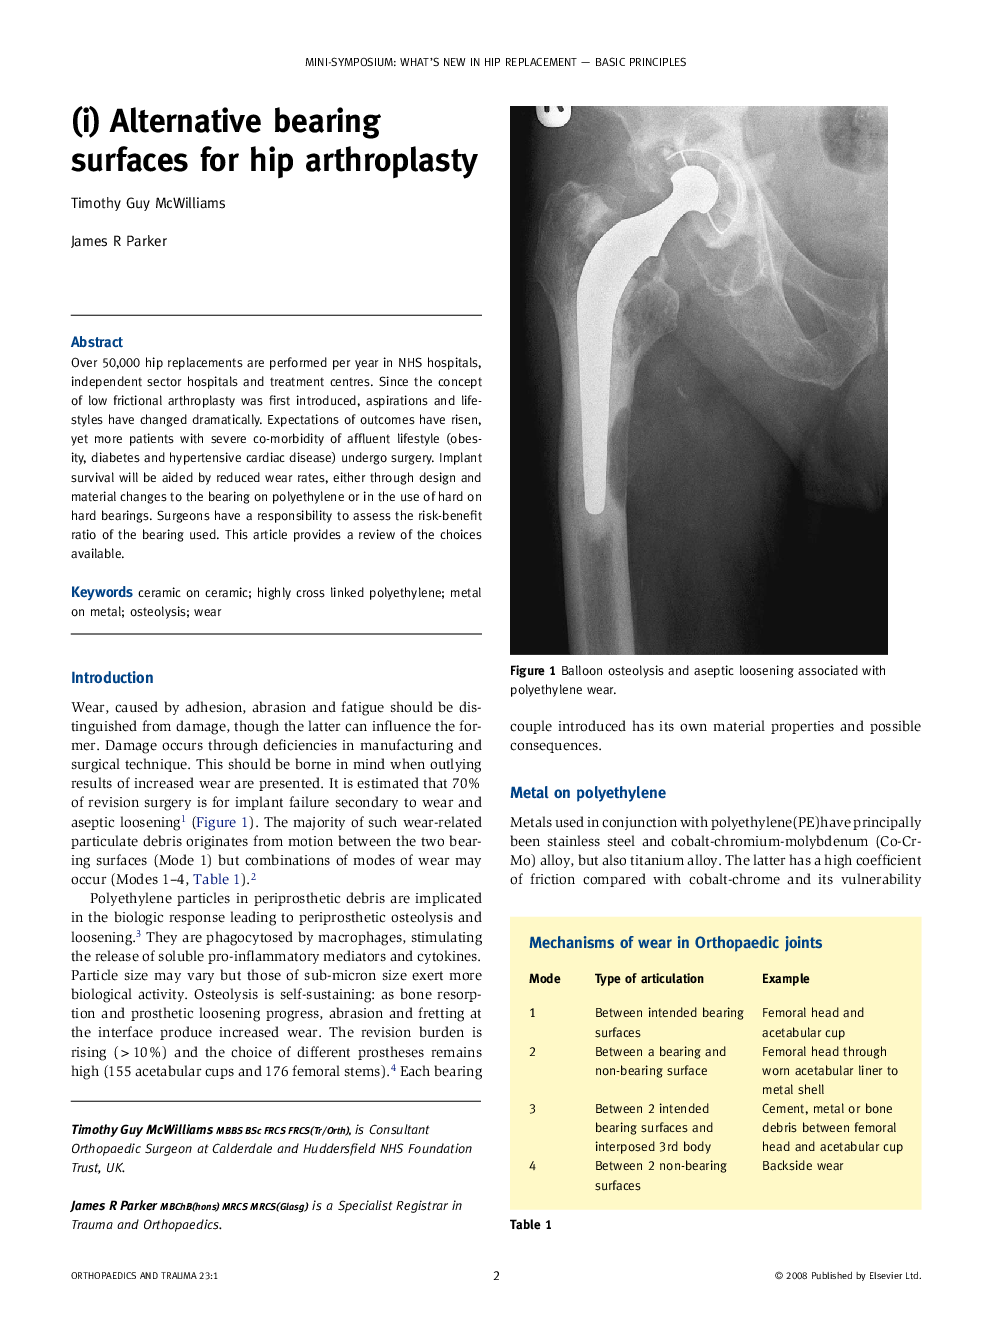 (i) Alternative bearing surfaces for hip arthroplasty